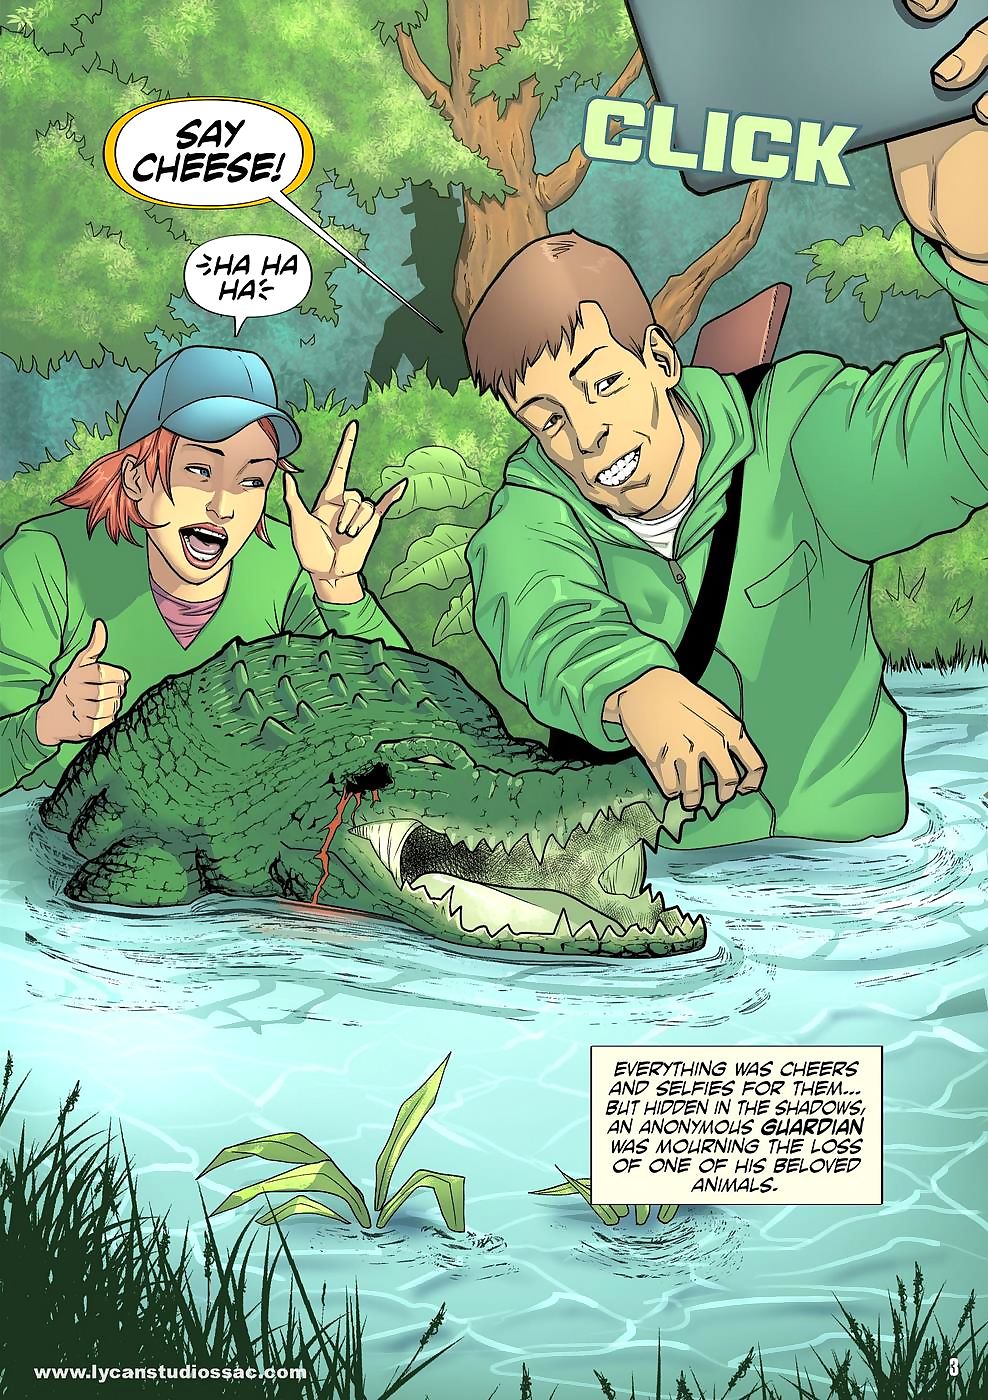 Locofuria- Karma of the Alligator page 1